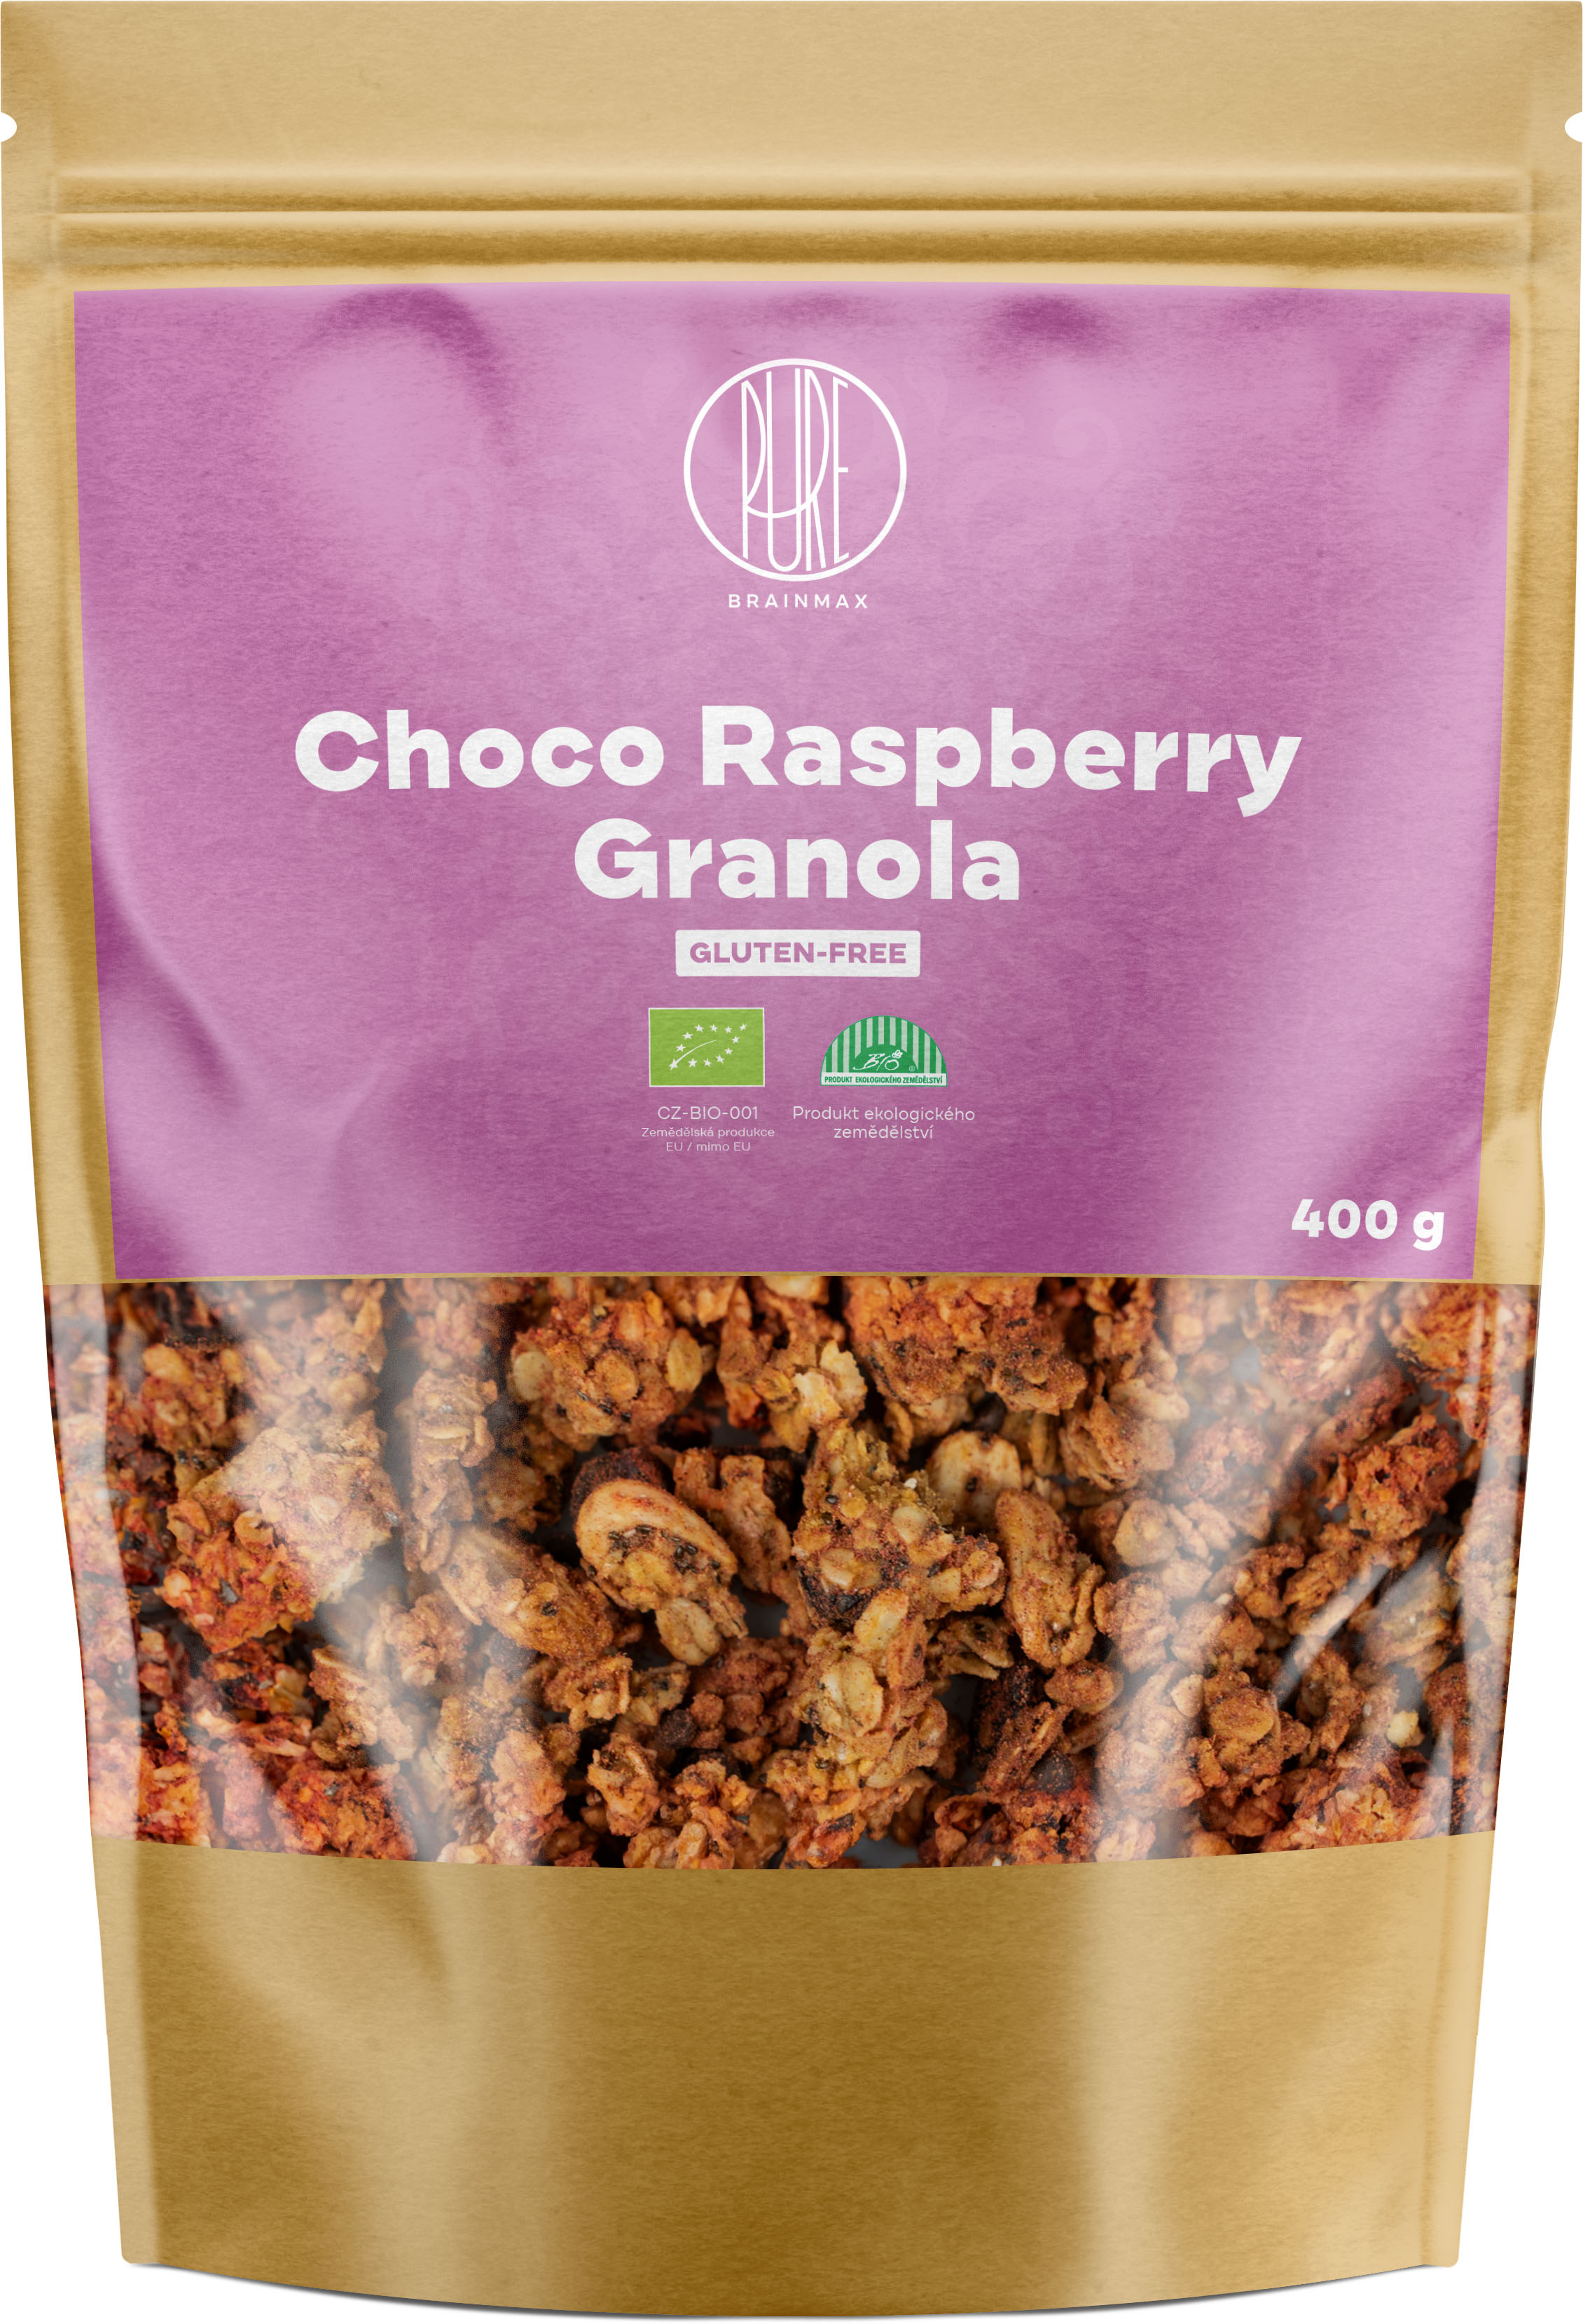 BrainMax Pure Choco Raspberry Granola, granola s čokoládou a malinami, BIO, 400 g *CZ-BIO-001 certifikát / Zapečené vločky s čokoládou a malinami